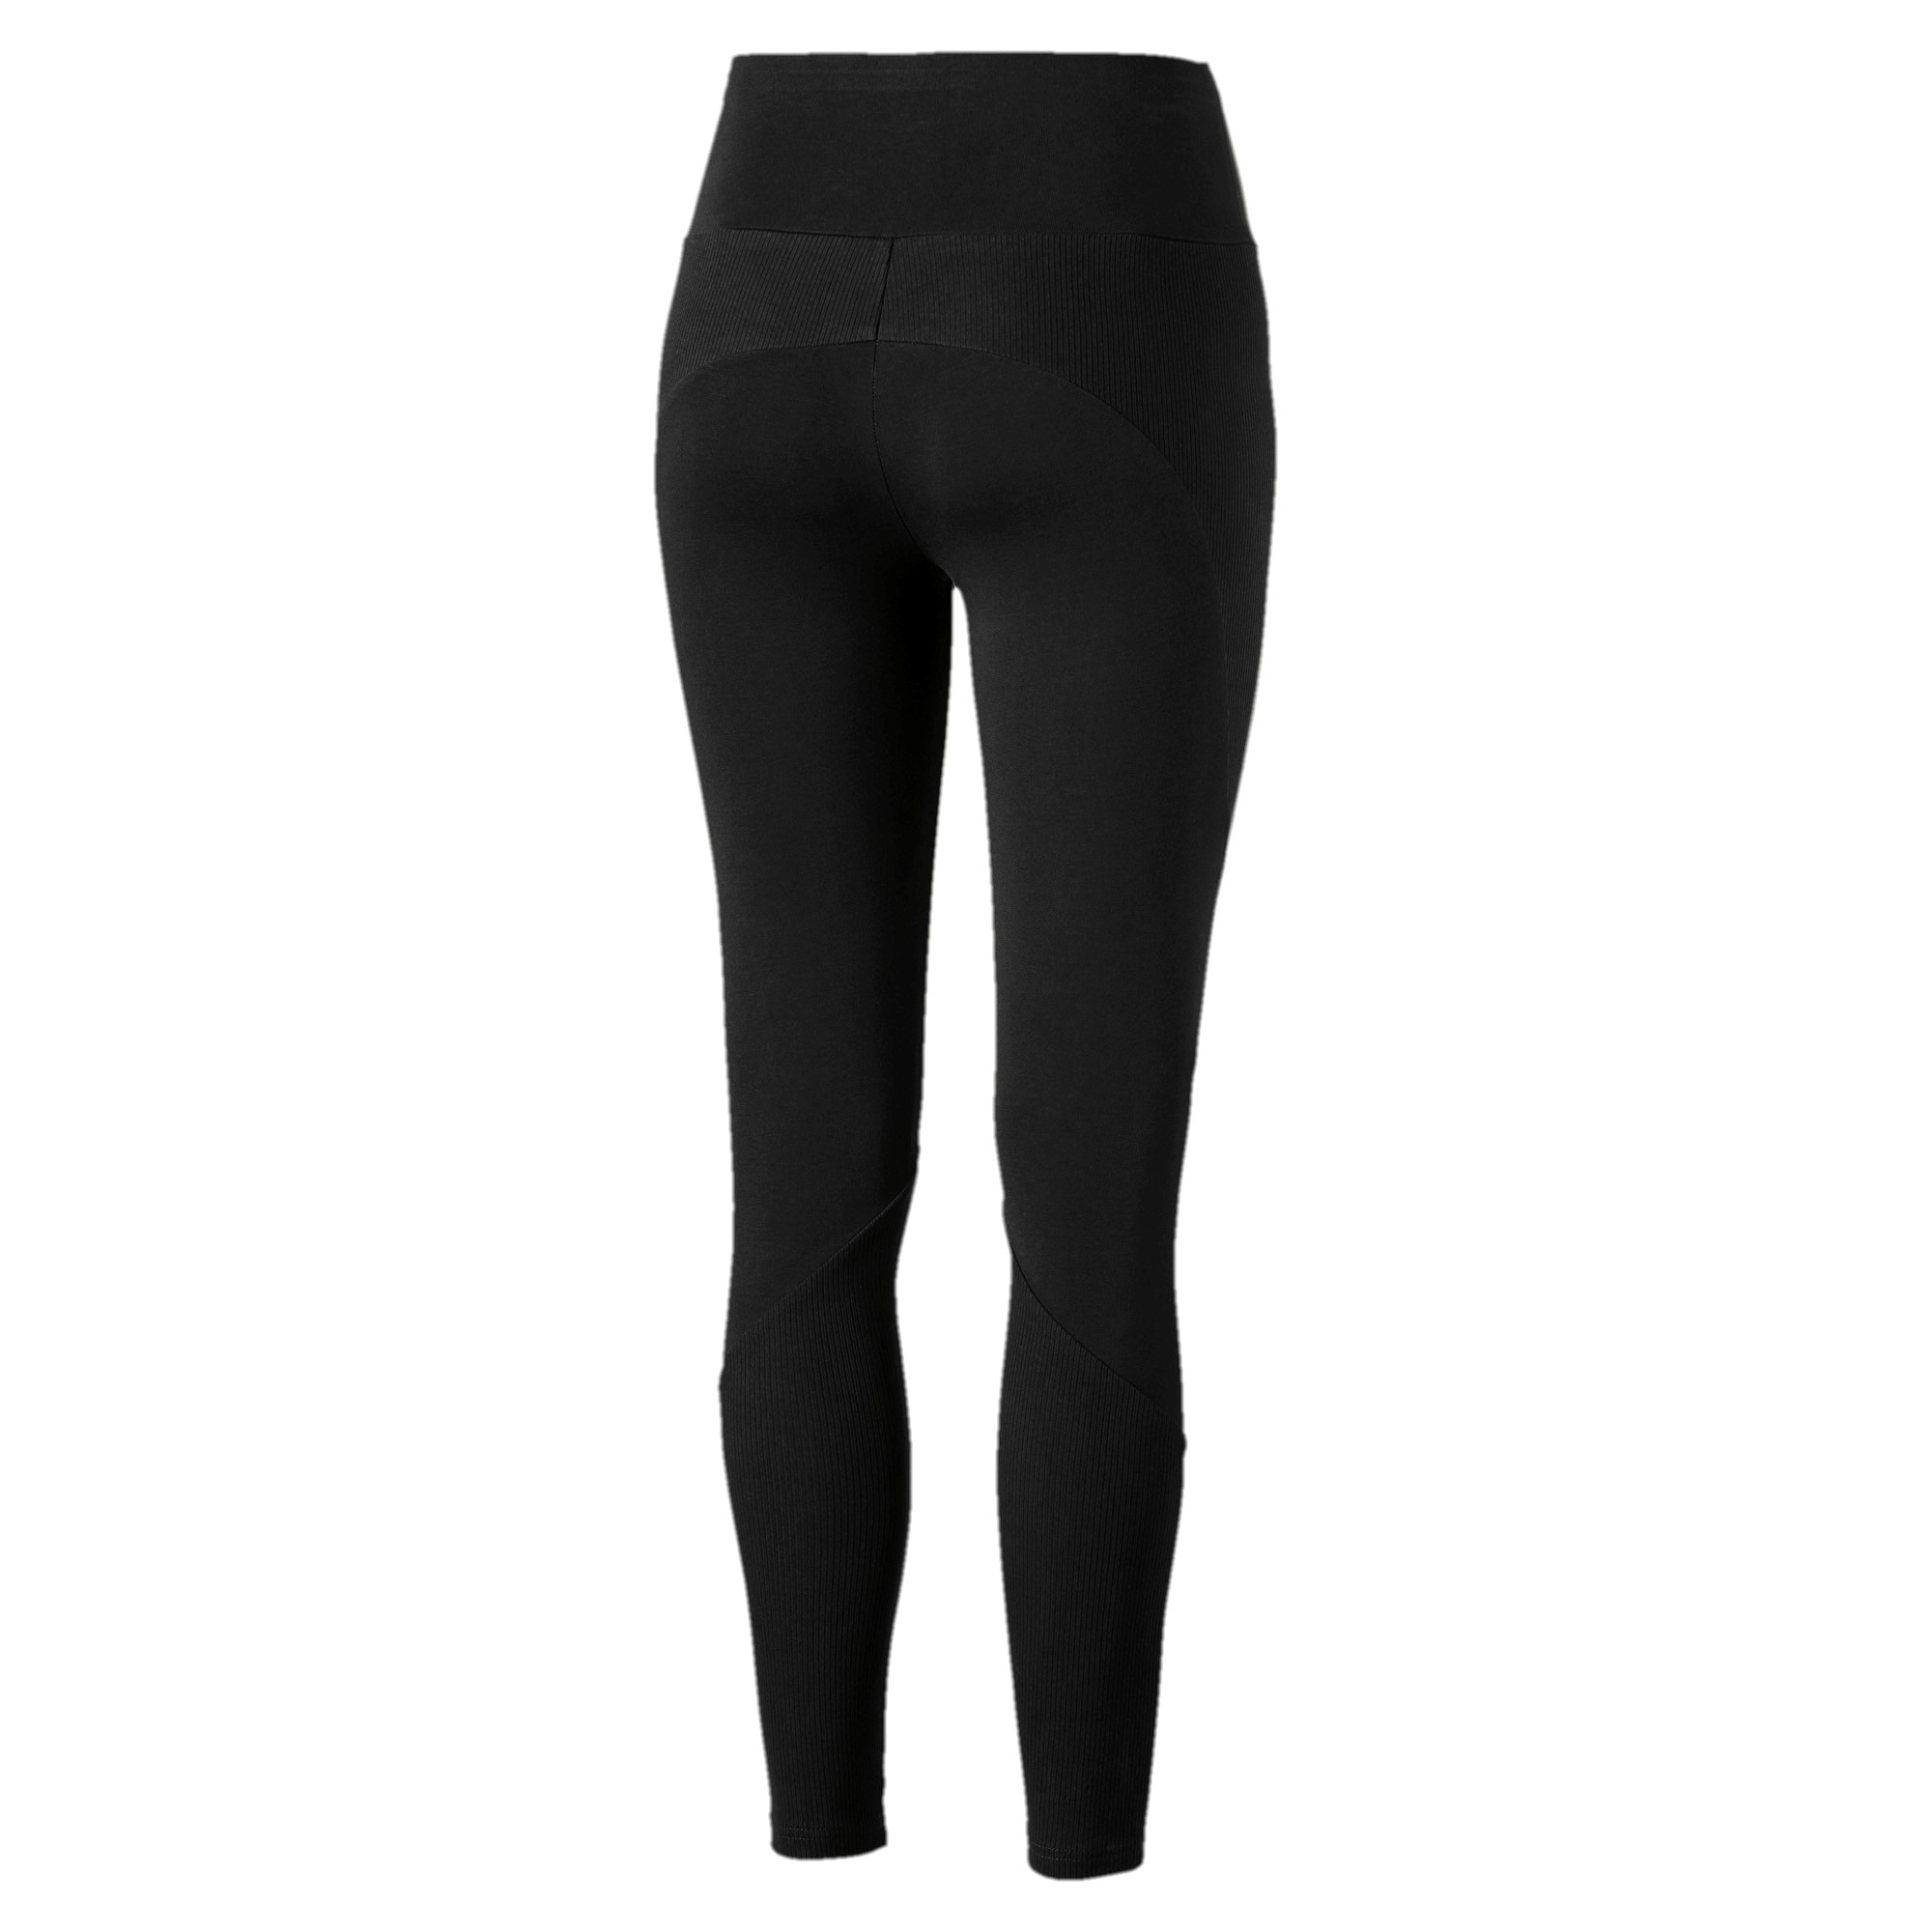 PUMA Damen Fusion Leggings Pant Hose Pants Fitnesshose schwarz 855141 01